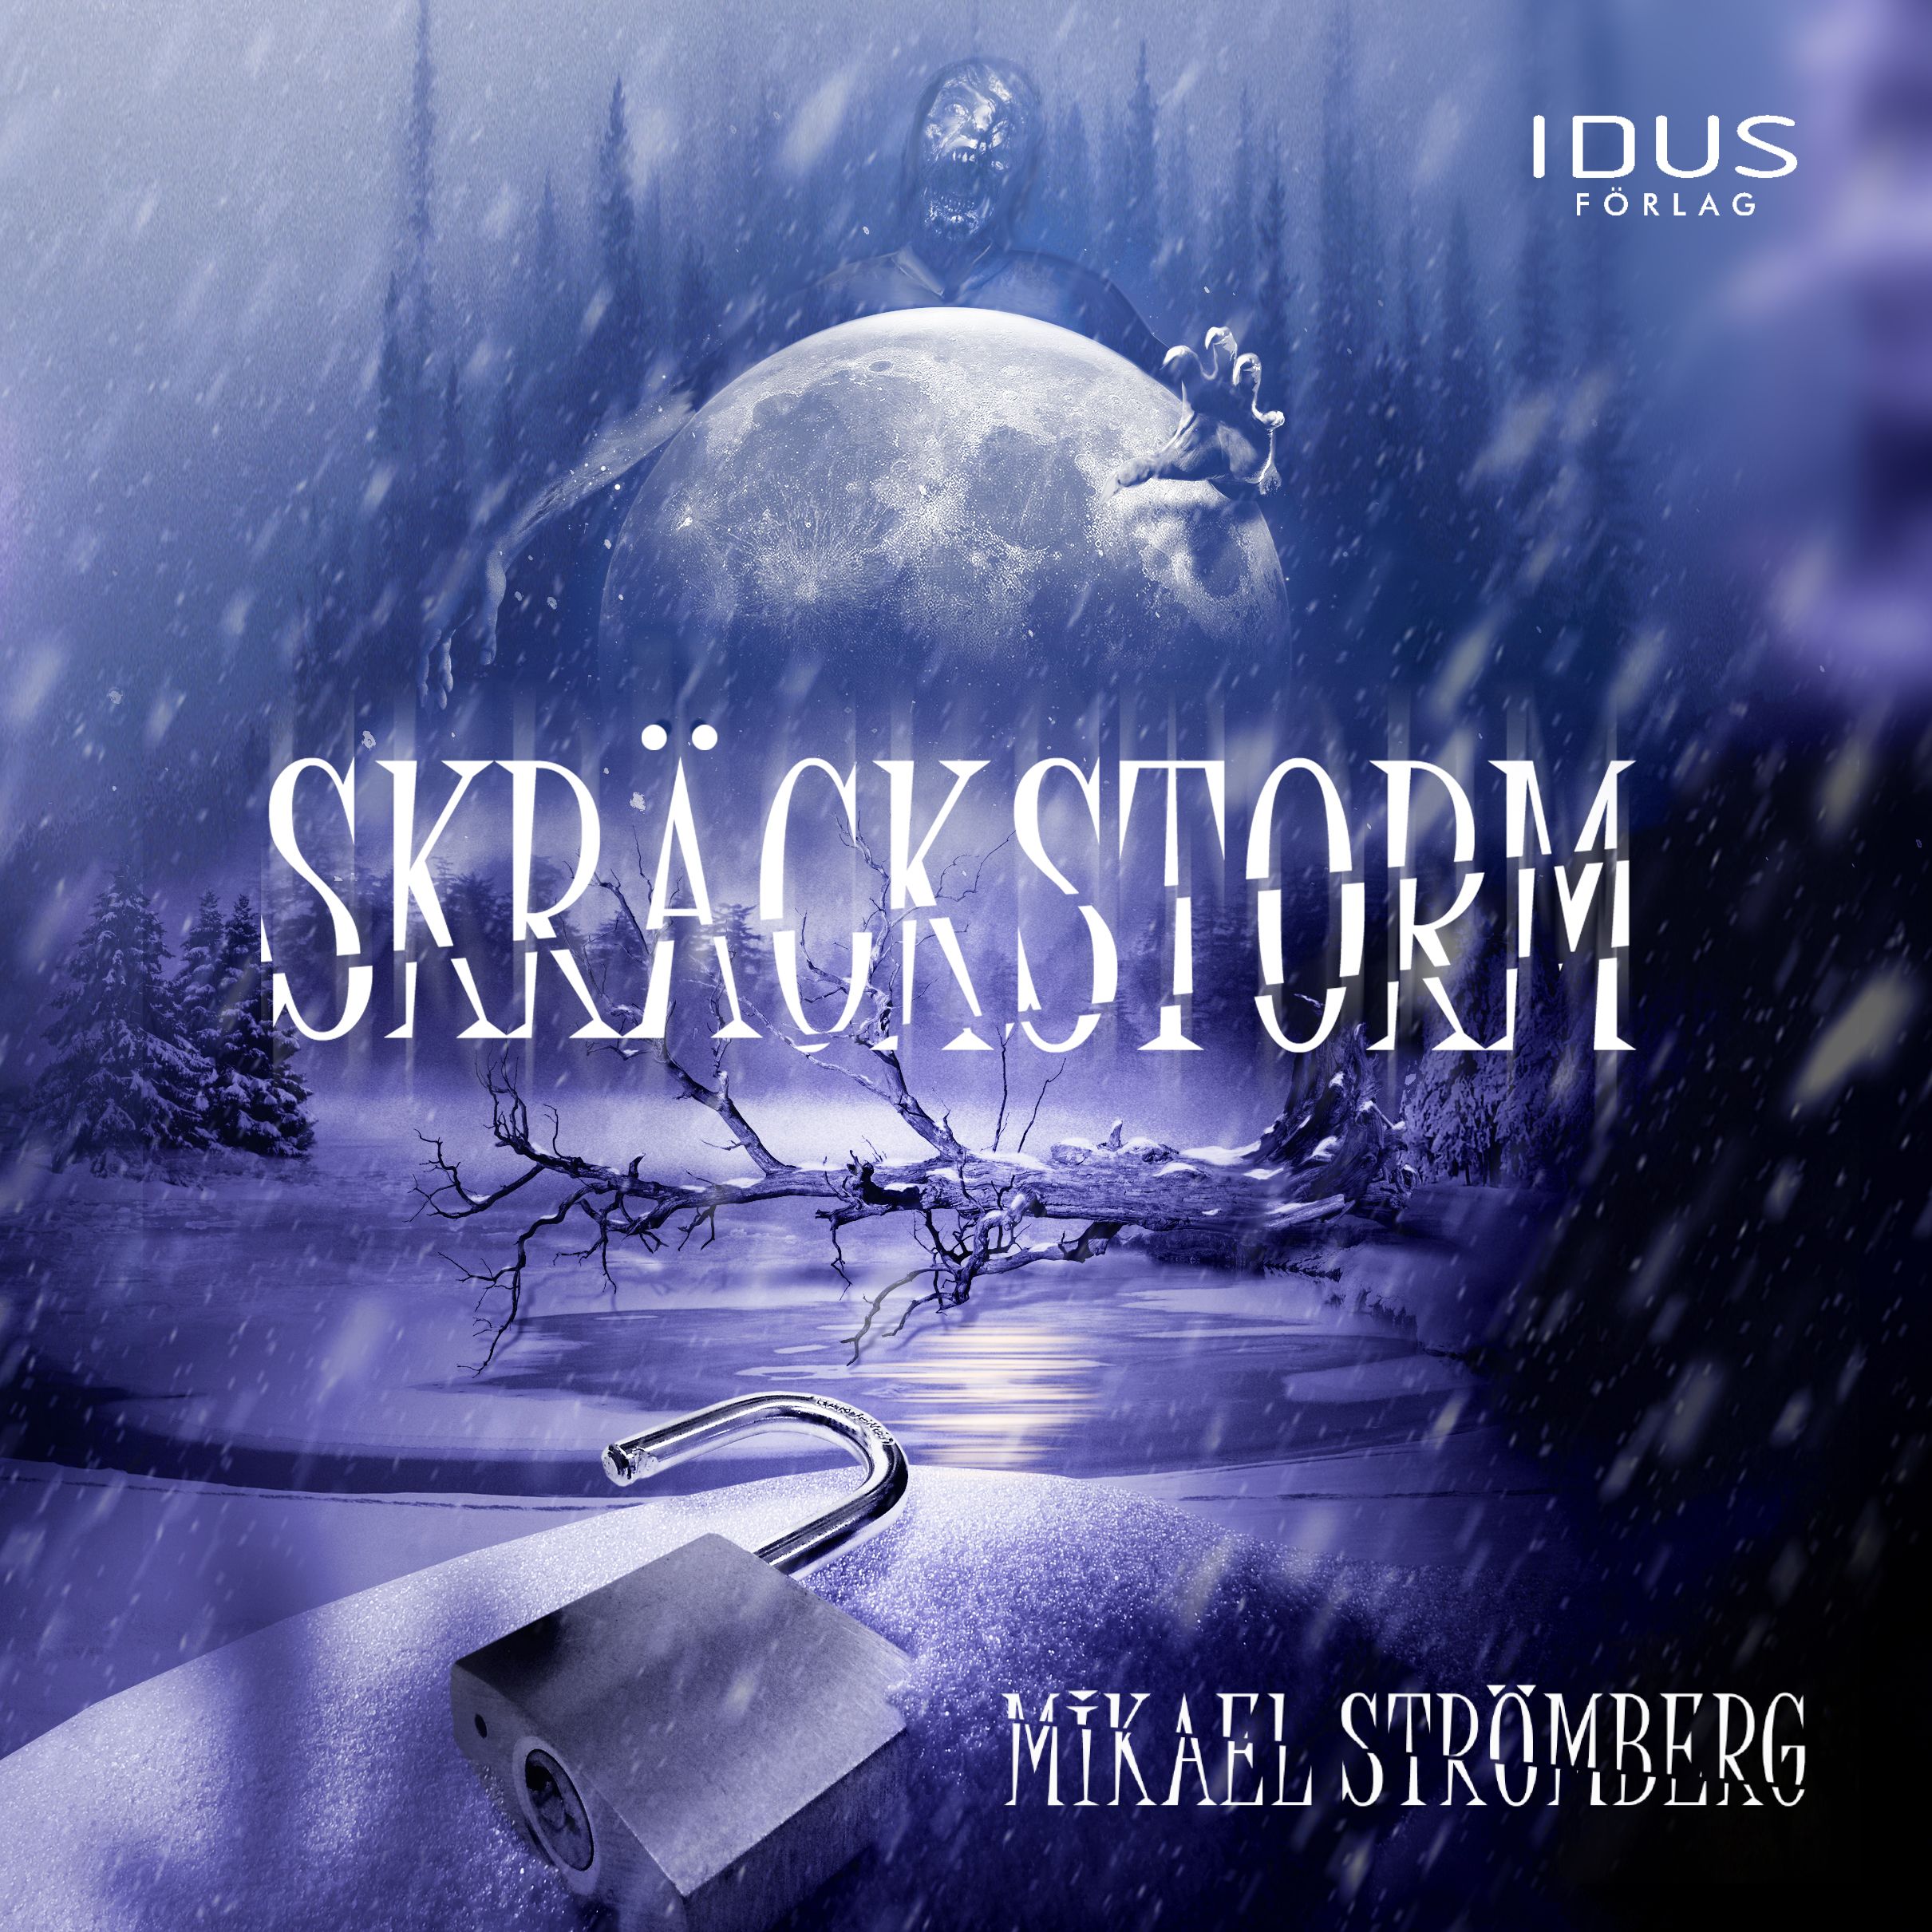 Skräckstorm, lydbog af Mikael Strömberg